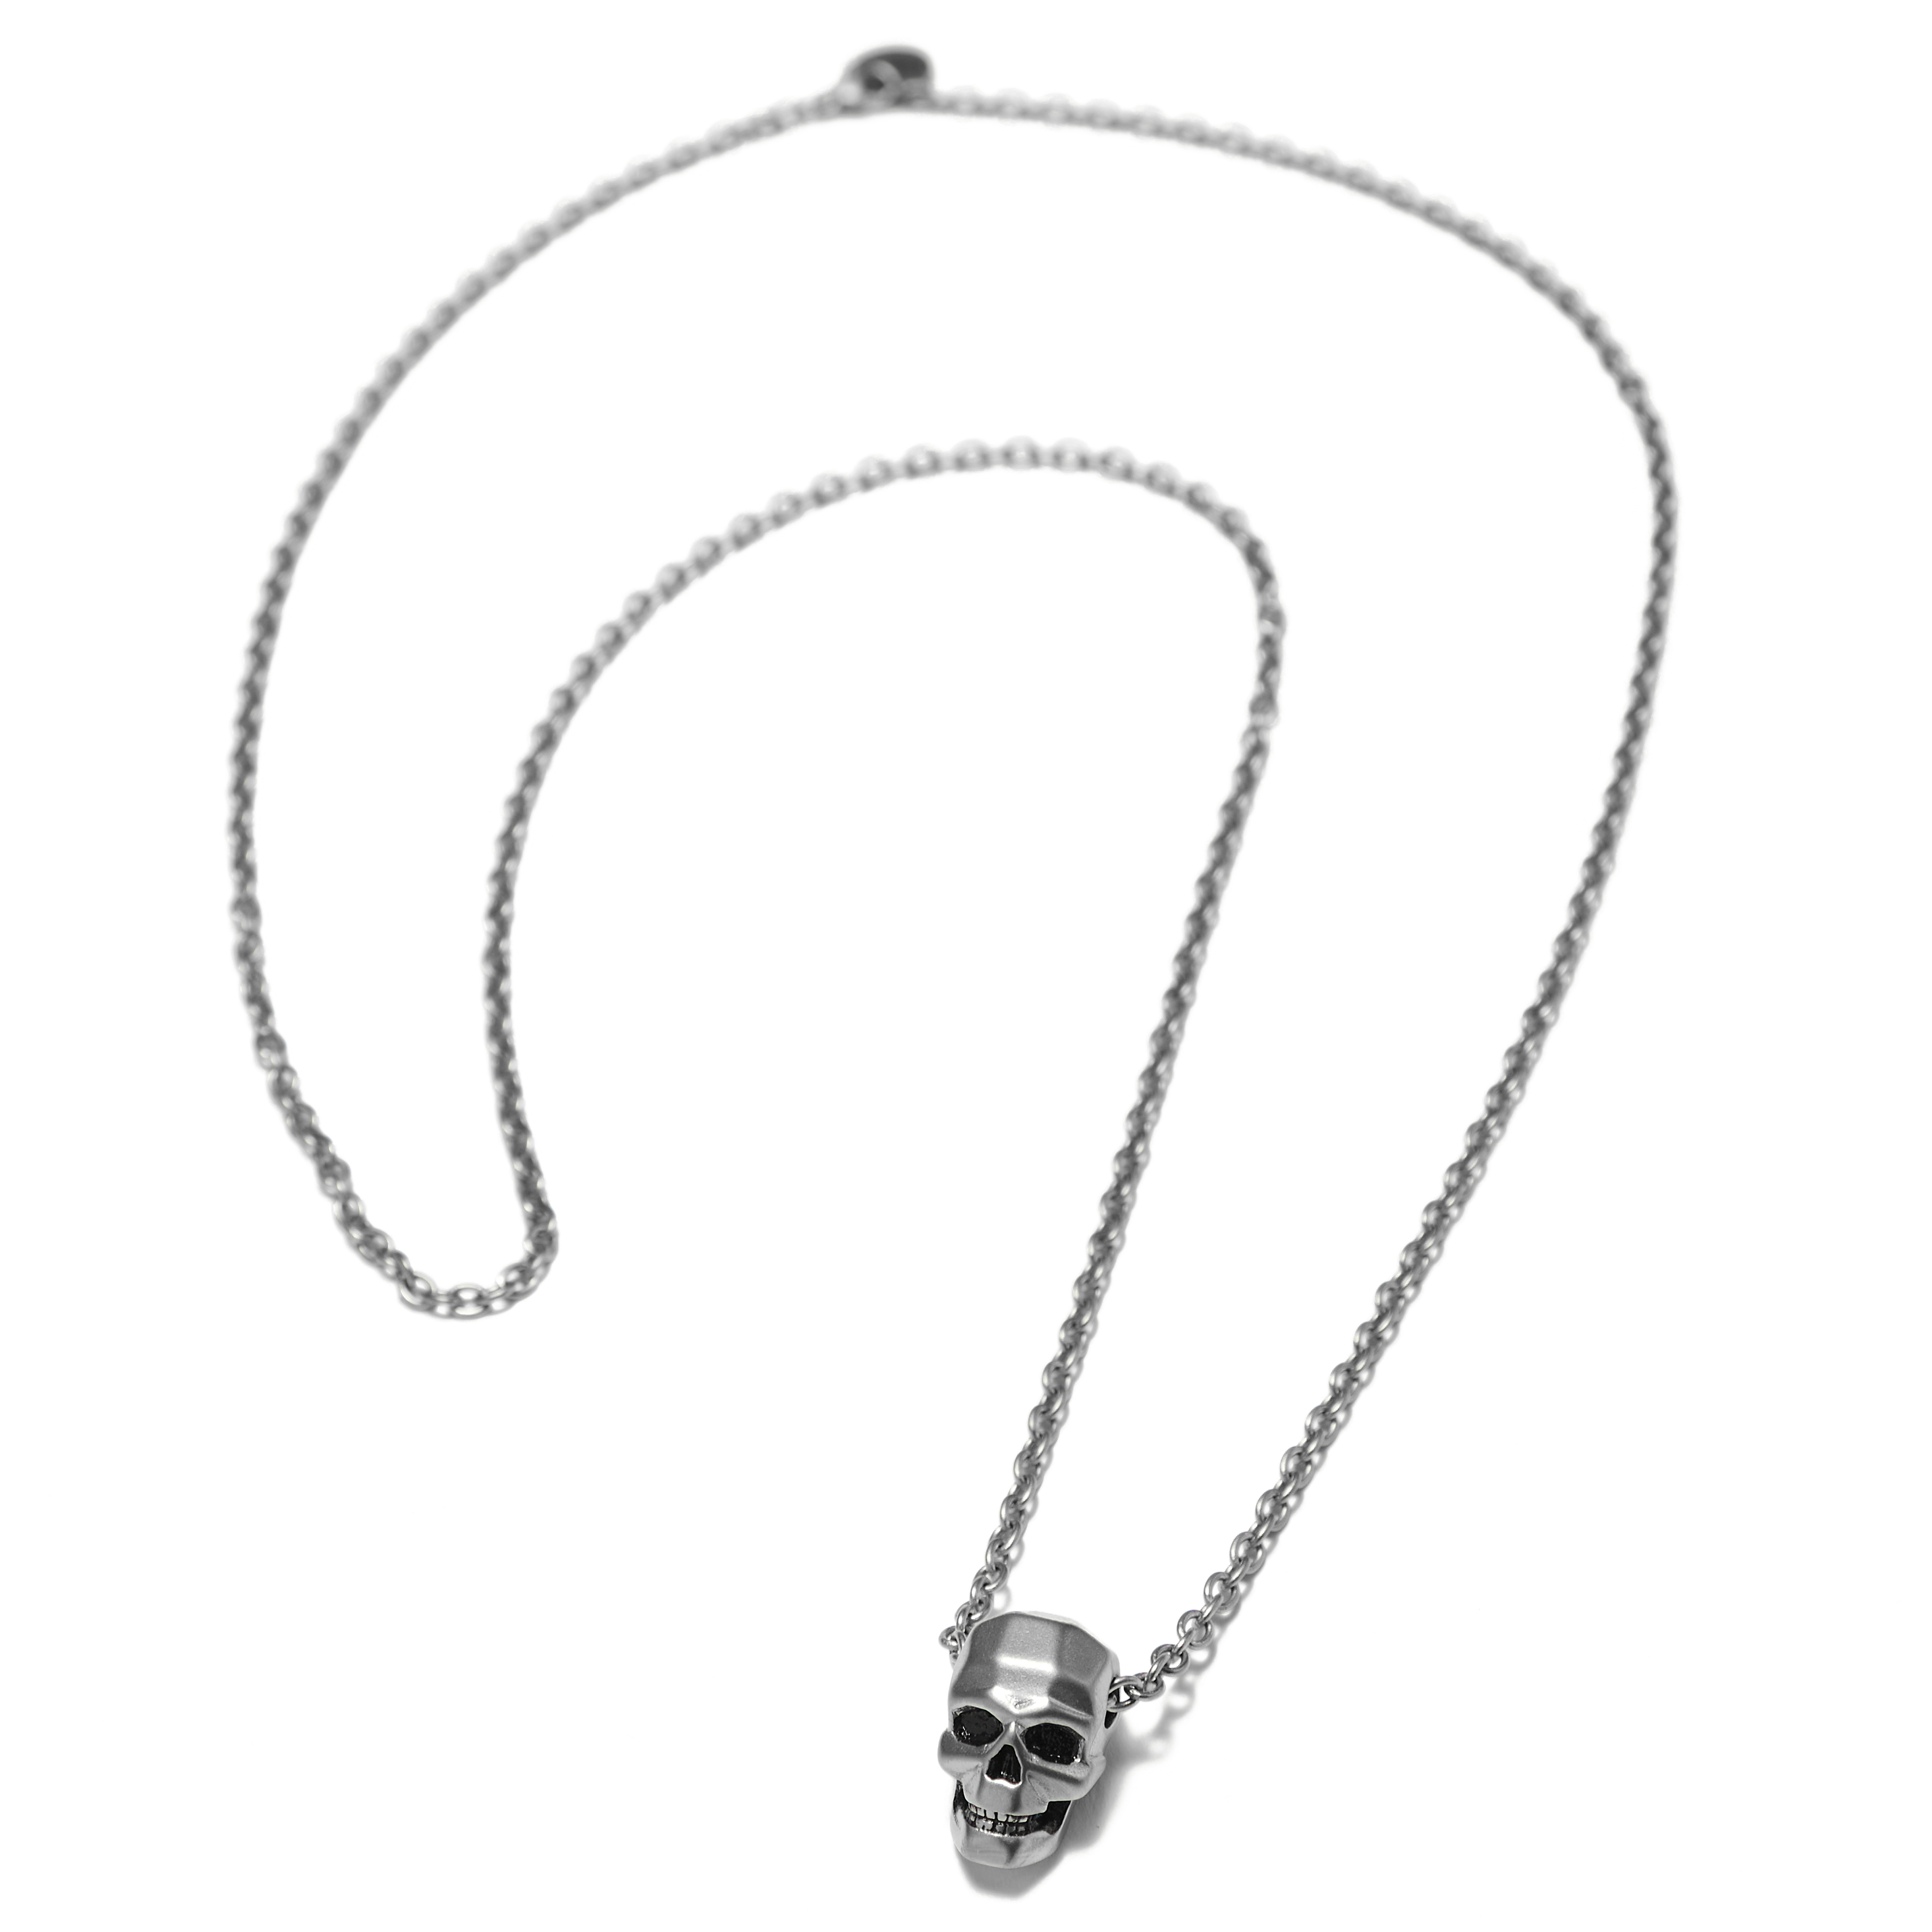 cadena fina de tono plateado para collar o colgante Collar de cadena de acero inoxidable de 2 mm 40,6 a 76,2 cm